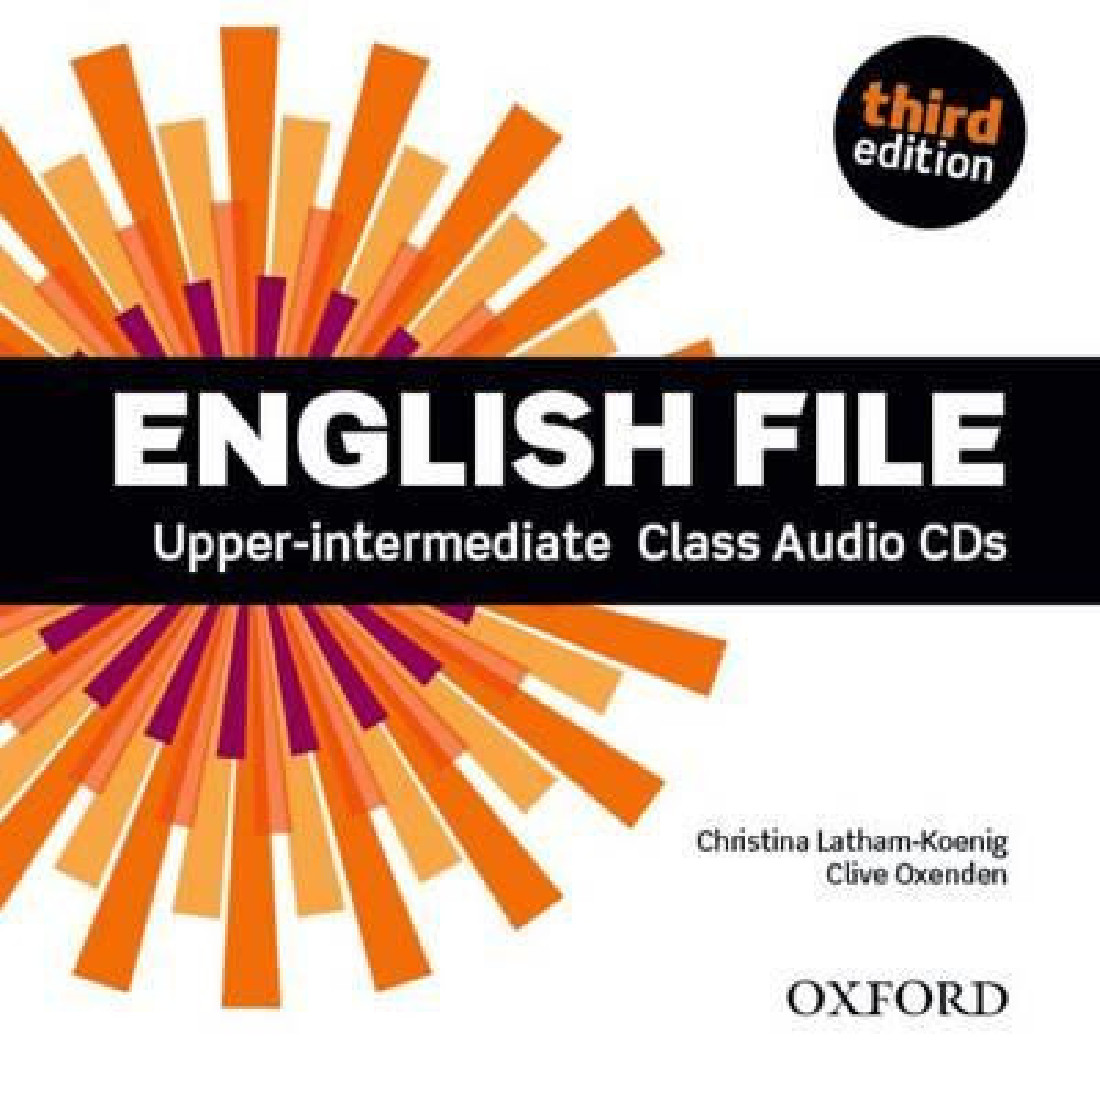 ENGLISH FILE 3RD EDITION UPPER-INTERMEDIATE CDs